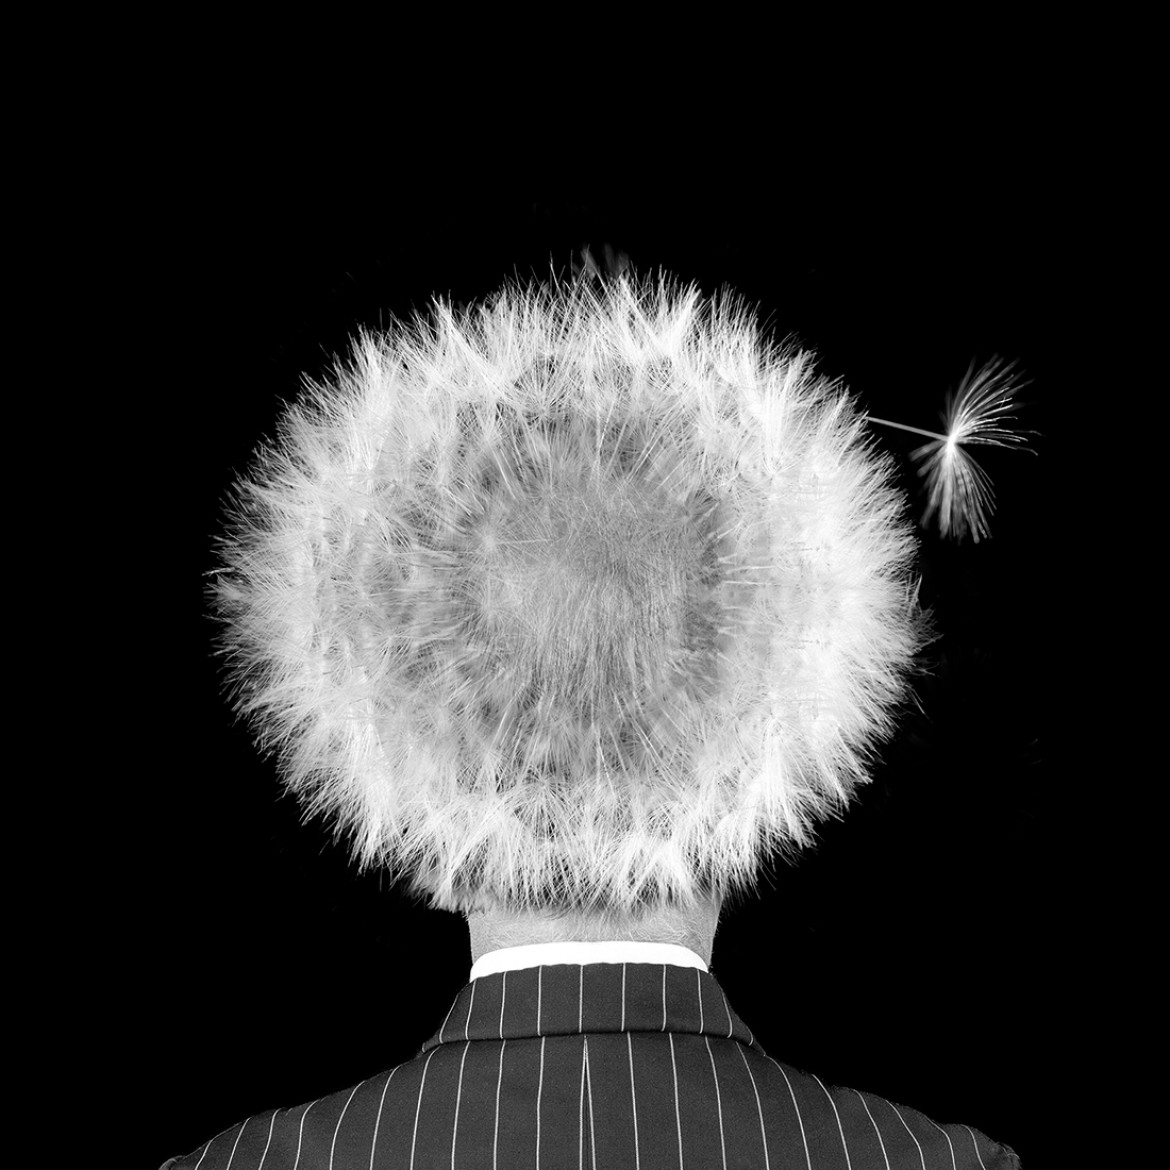 fot. Michael Knudsen, "Hairloss", 1. nagroda w kategorii Conceptual / Monovisions Photography Awards 2019